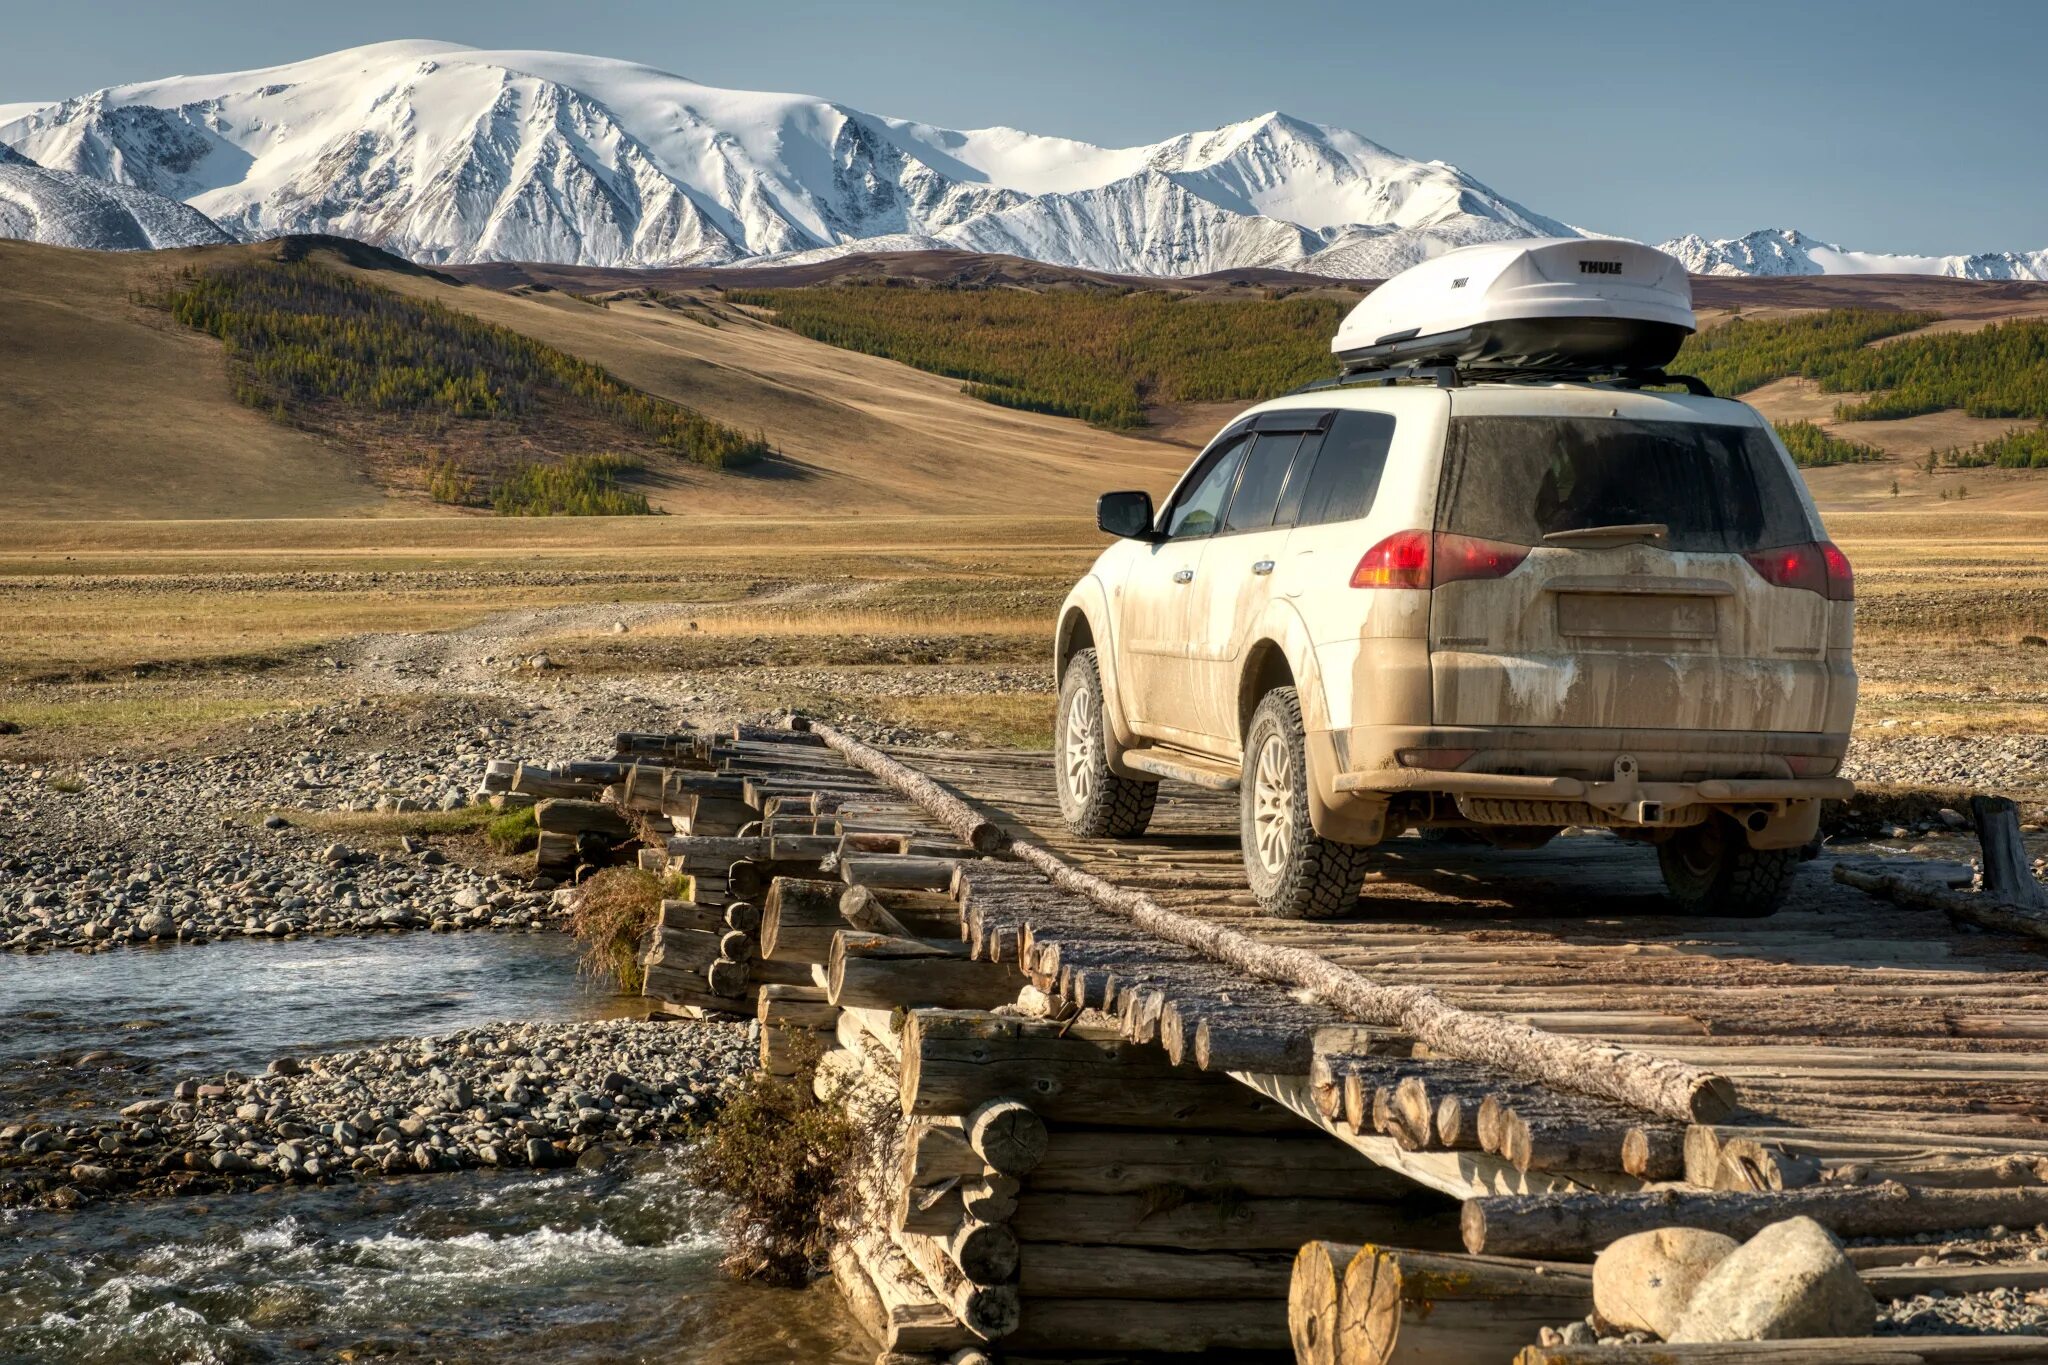 Еду в казахстан на машине. Дорога Монгун-Тайга. Путешествие на машине. Авто для путешествий. Автомобиль для туризма.